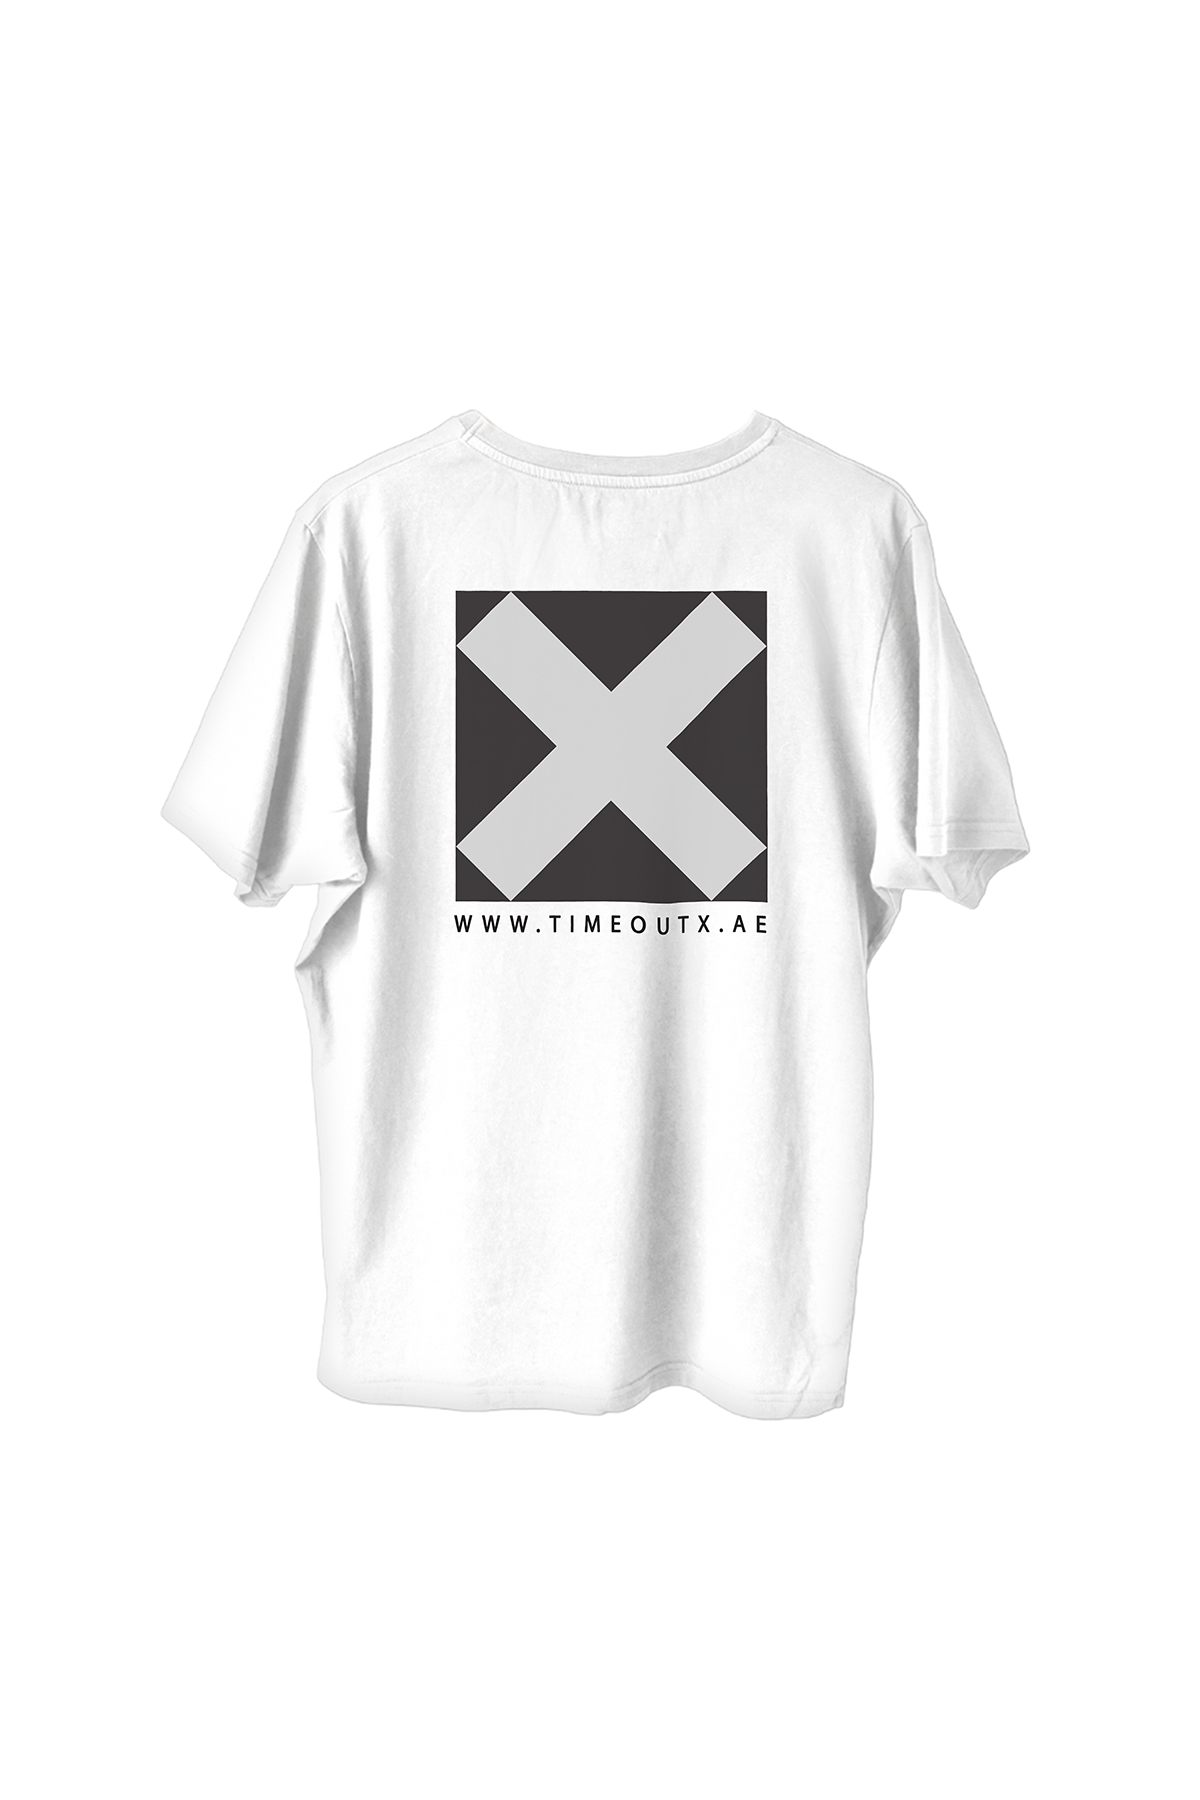 Time-Out-X-Signature-Classic-Logo-Cotton-T-Shirt—White—Back